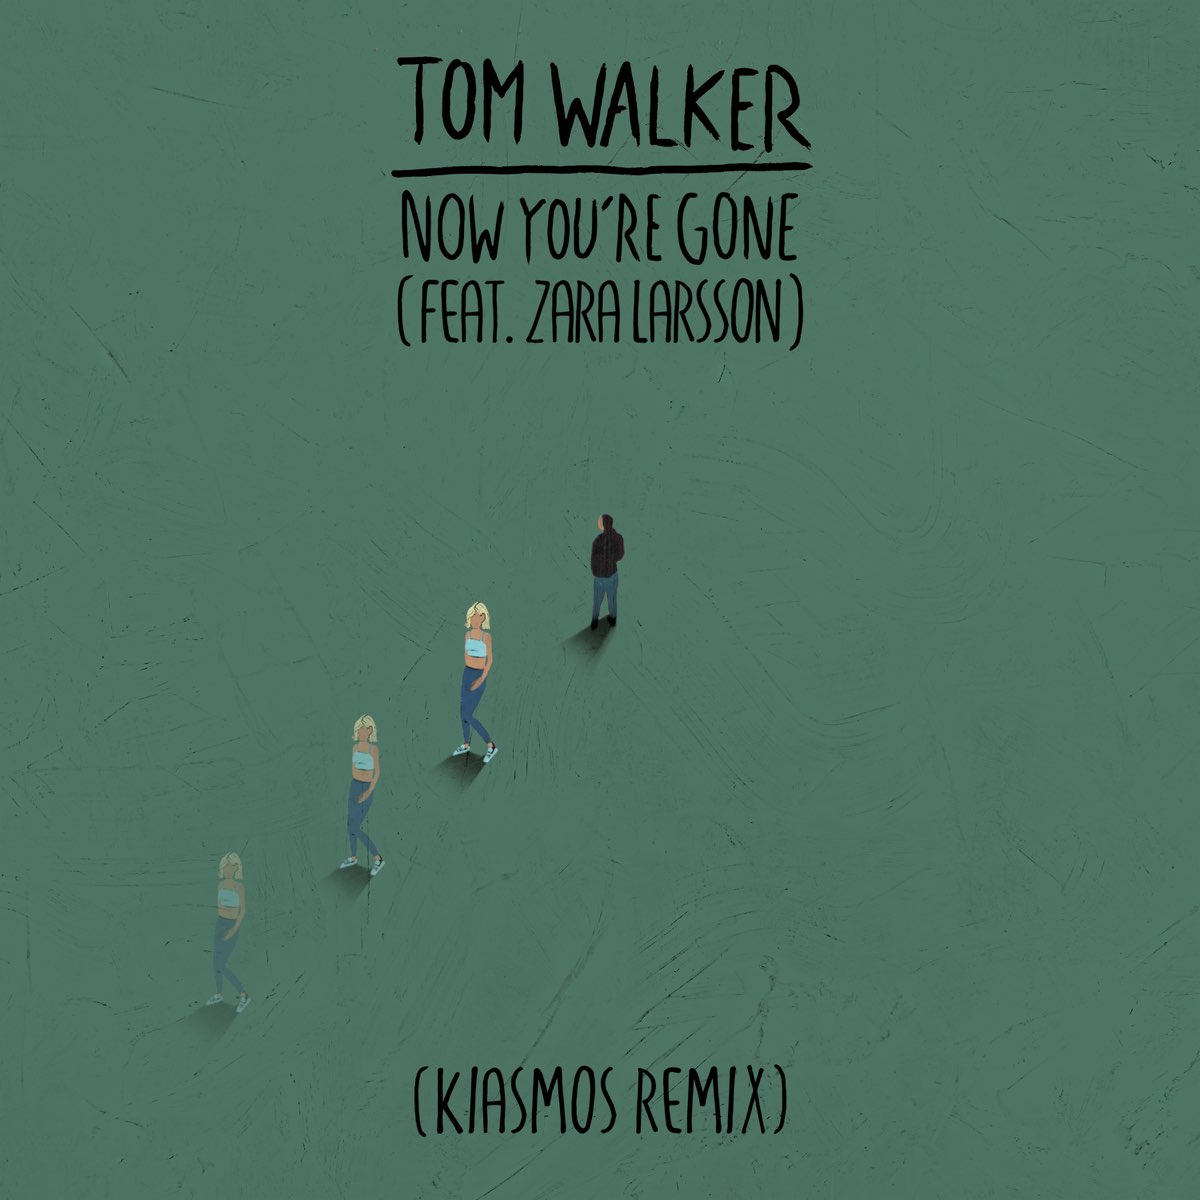 Now You're Gone (feat. Zara Larsson) [Kiasmos Remix] - Single by Tom Walker  on Apple Music